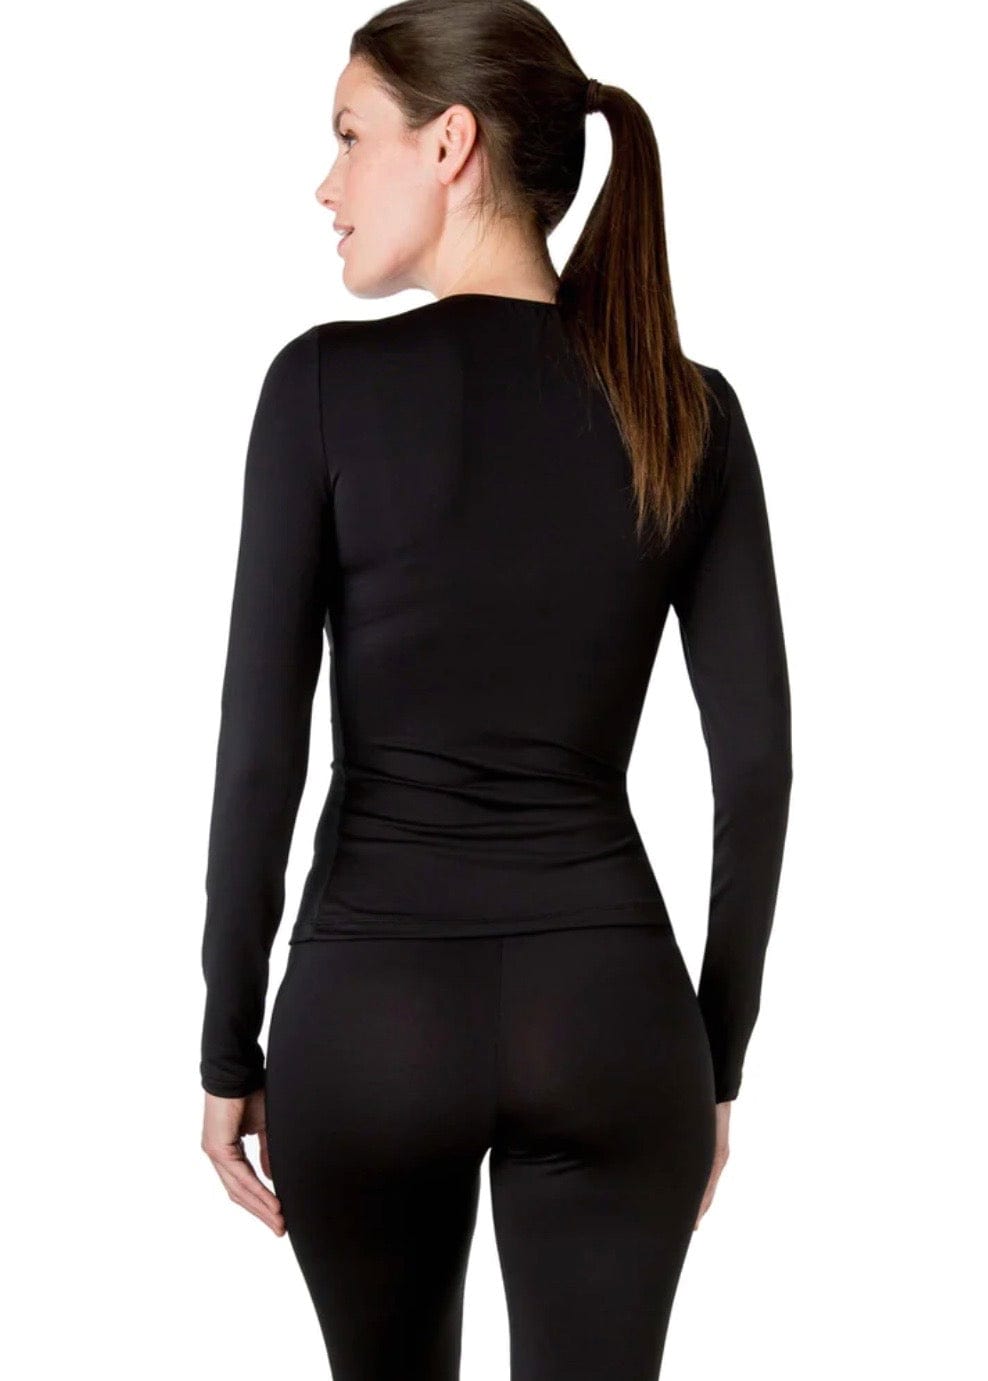 Elita Women's tops Elita Warm Wear Microfiber Long Sleeve Top